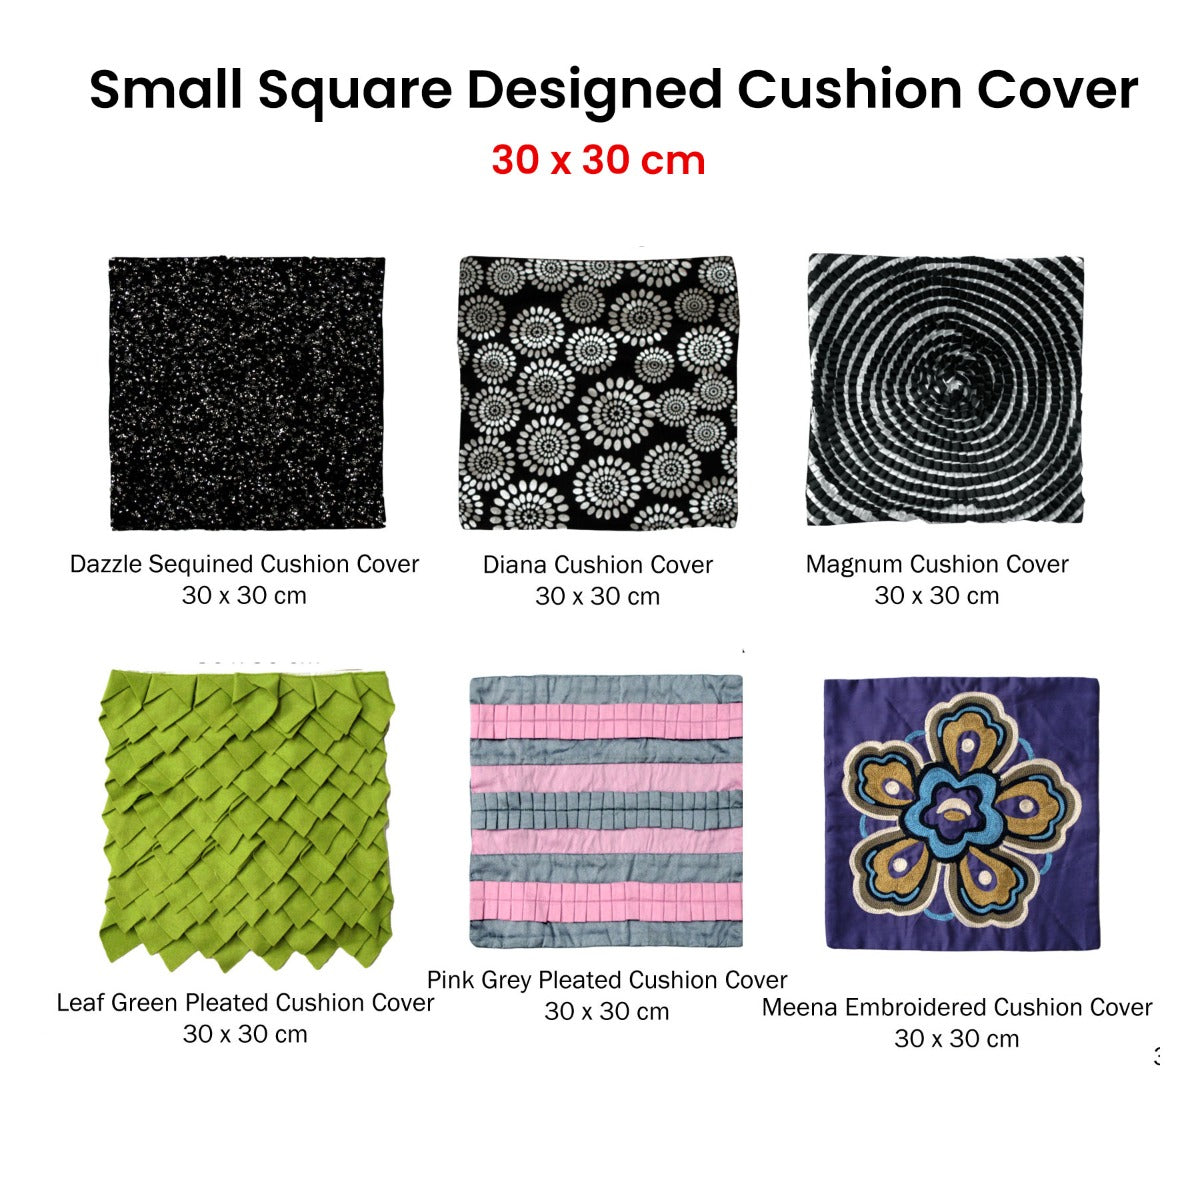 Small Designed Square Cushion Cover 30 x 30 cm Meena